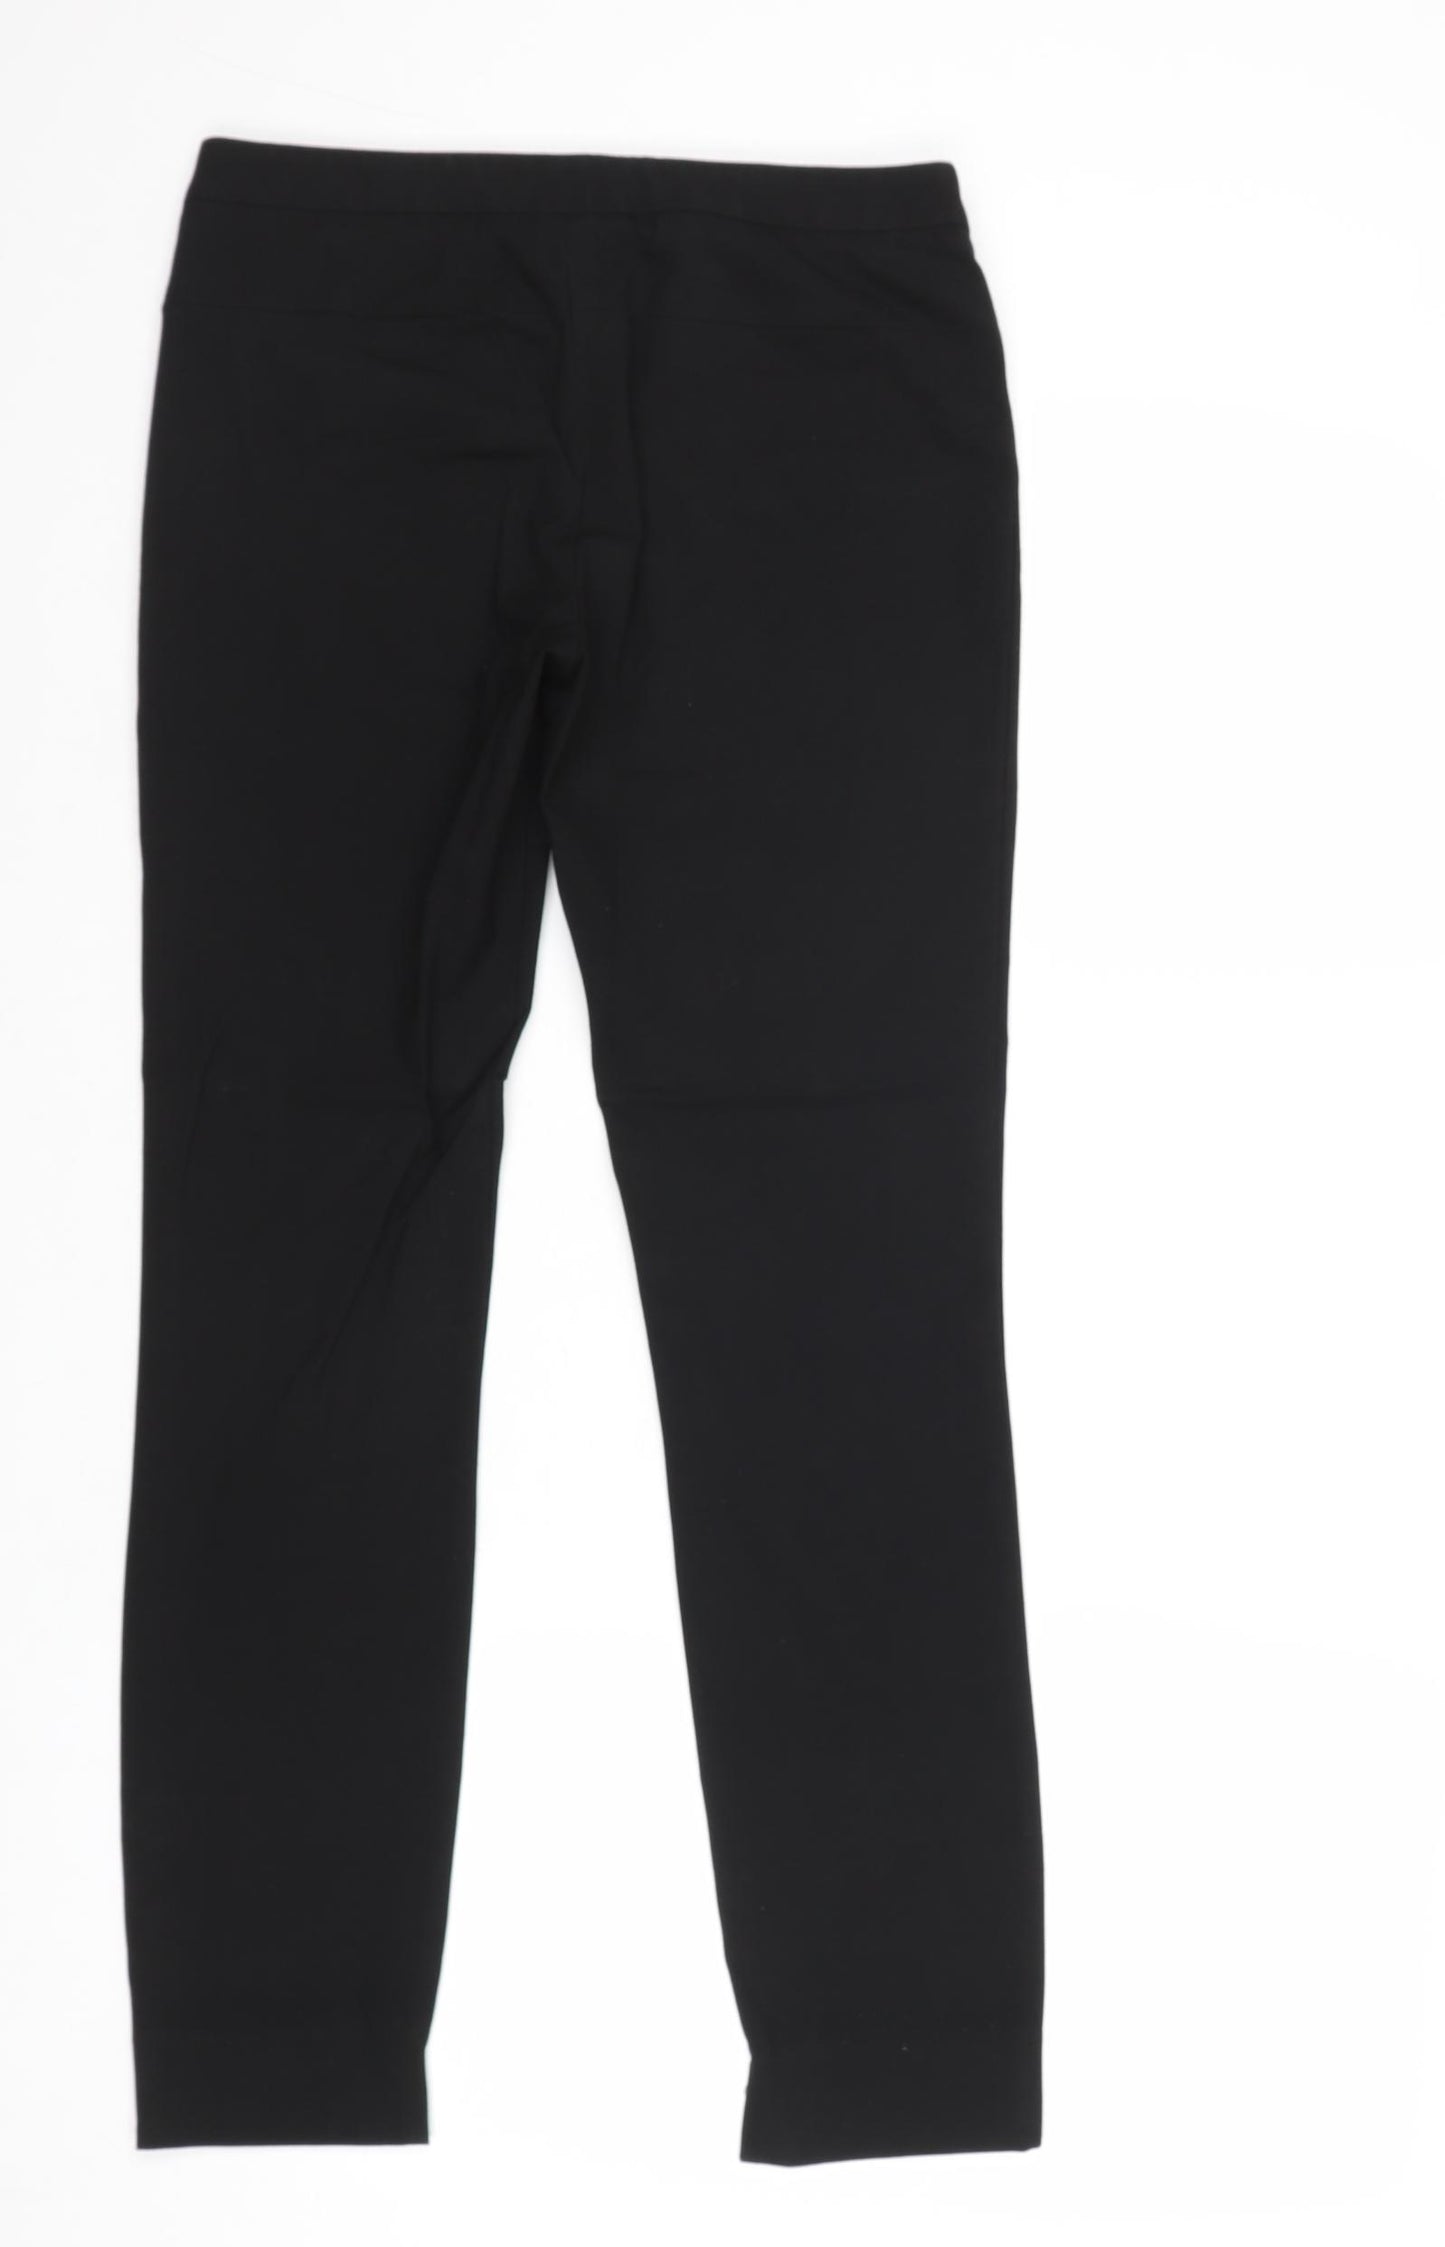 Zara Womens Black Polyester Trousers Size 6 Regular Zip